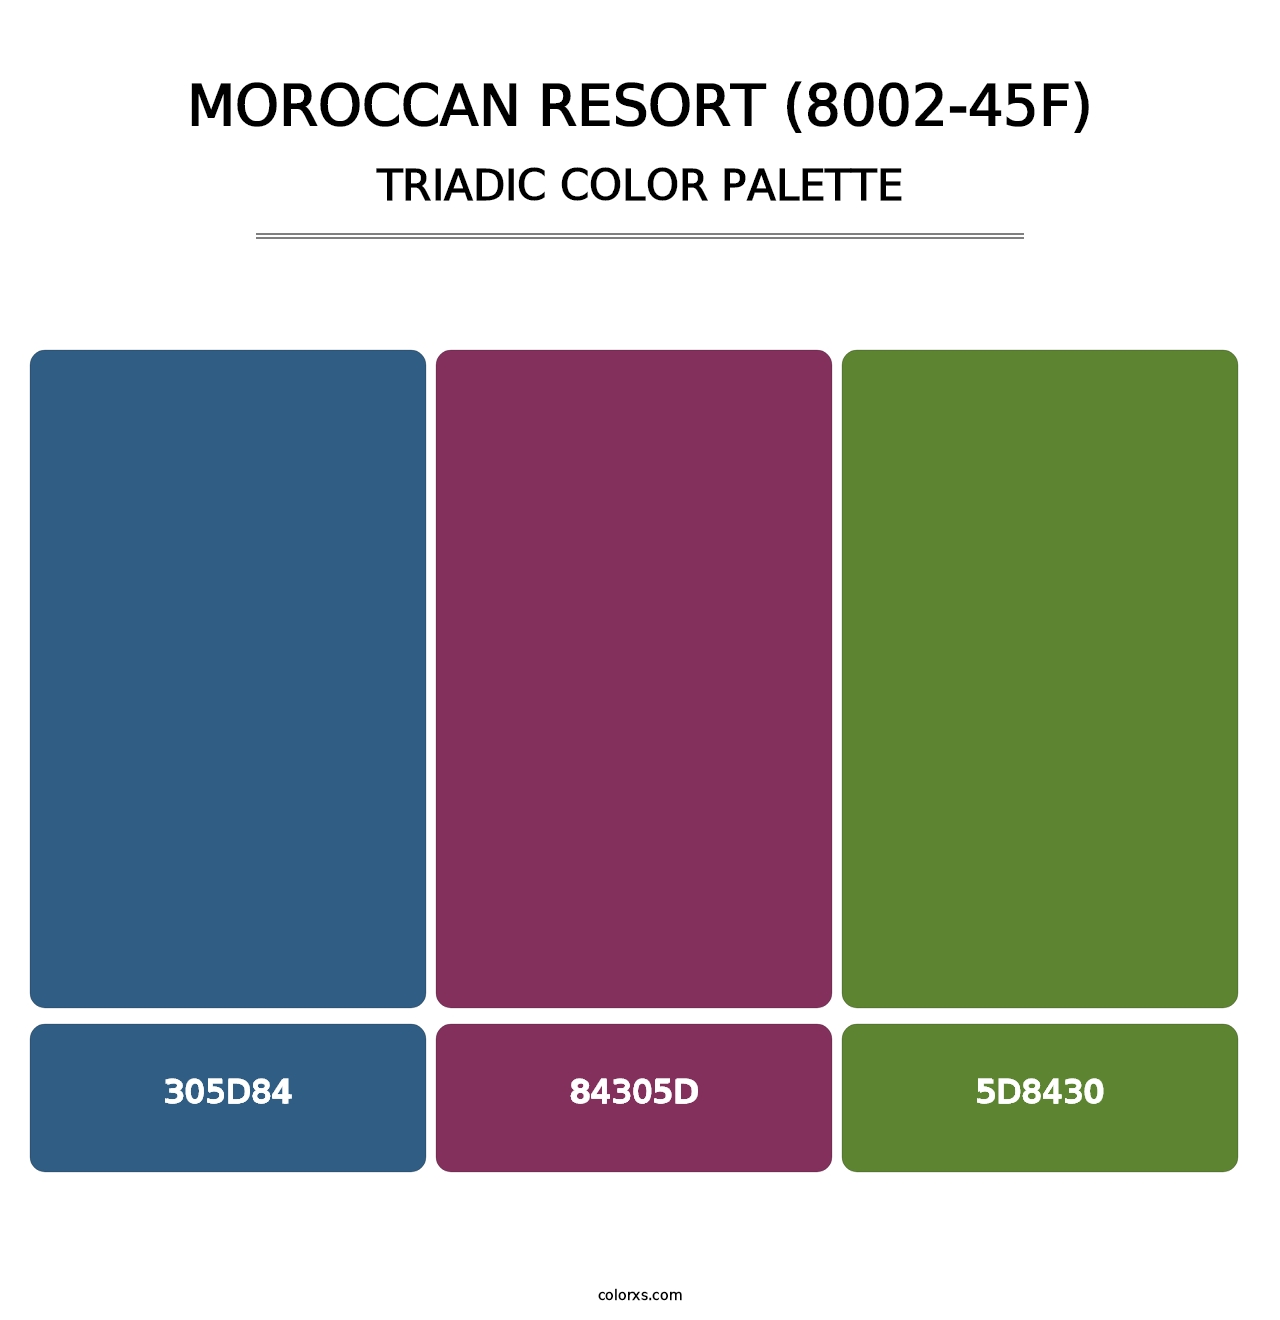 Moroccan Resort (8002-45F) - Triadic Color Palette